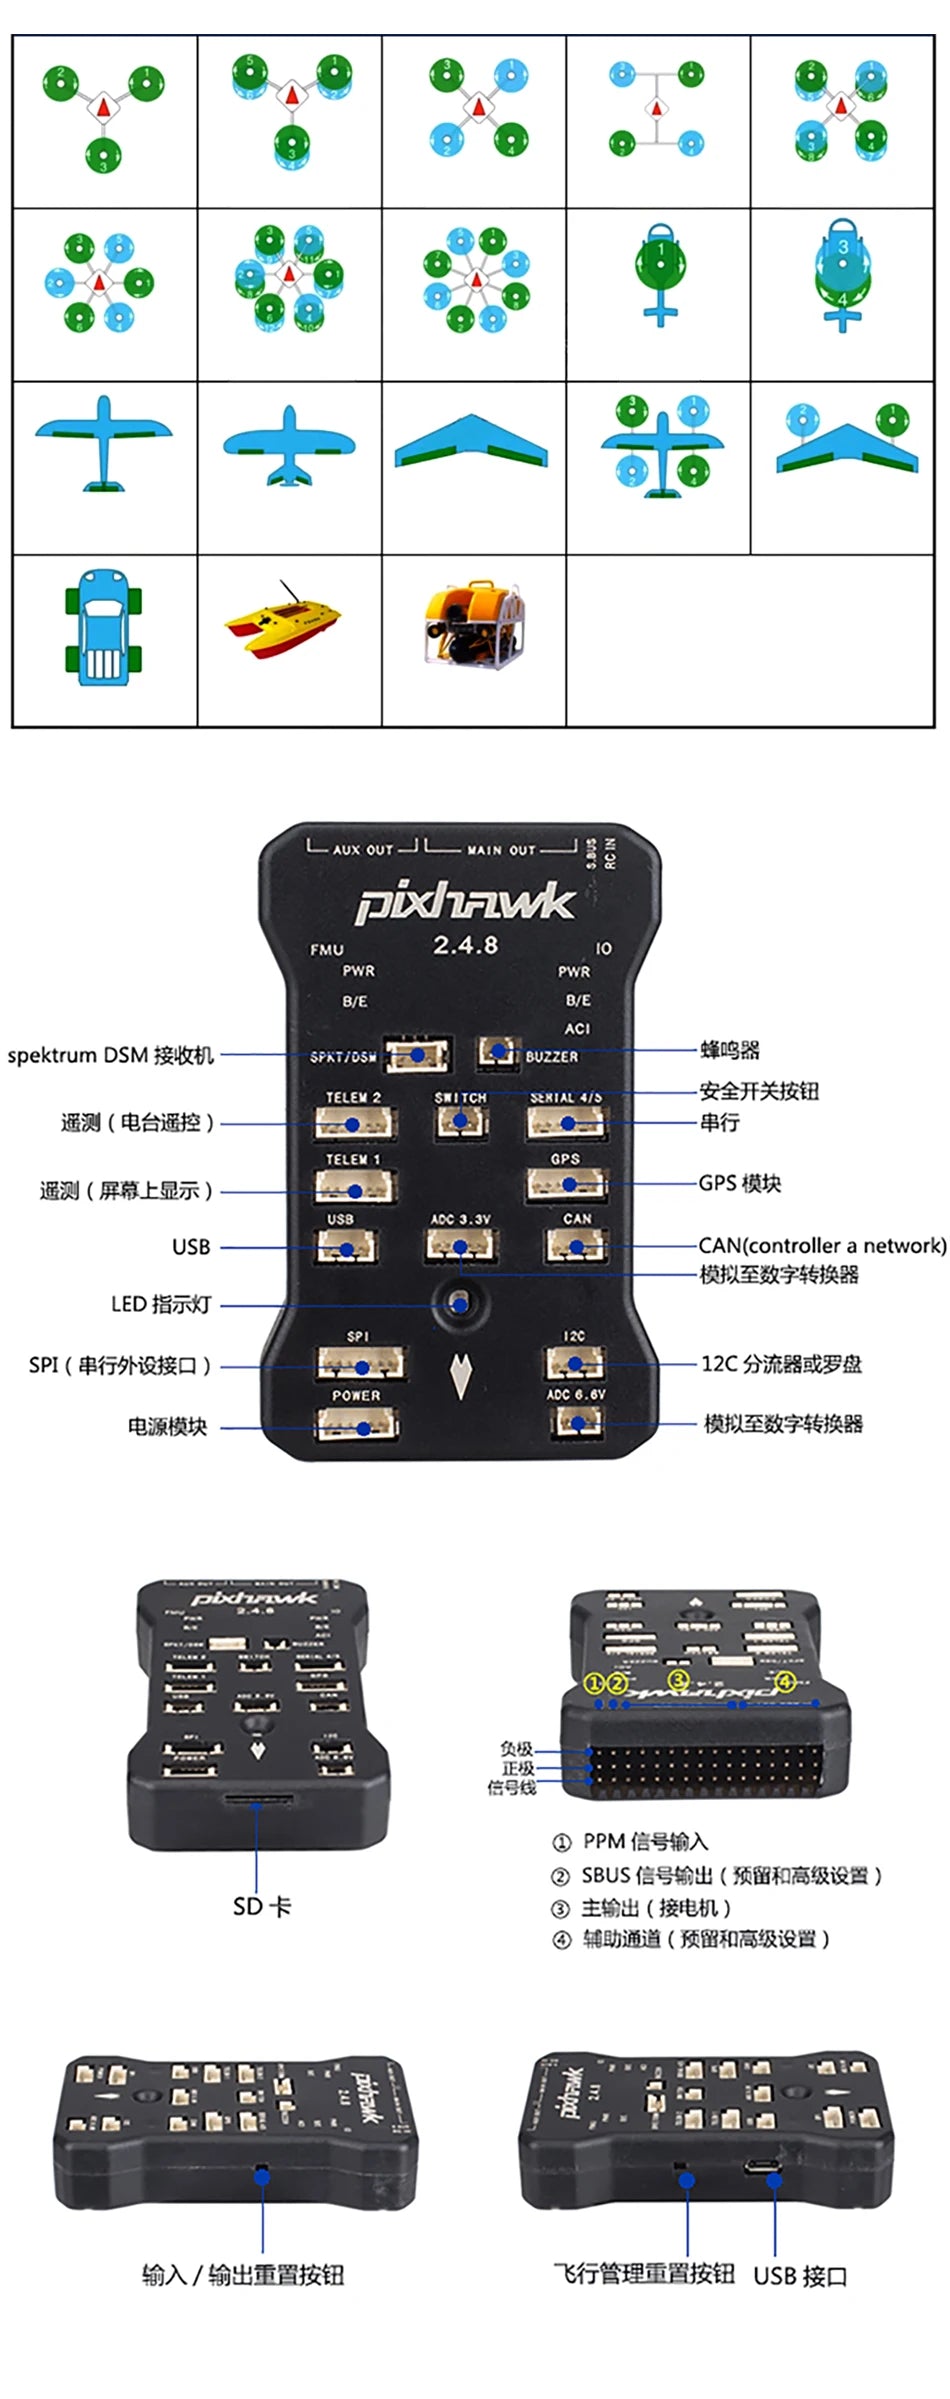 Pixhawk PX4 PIX 2.4.8 32 Bit Flight Control, 'iwrIGTB KeHRISTB USB CAN(controller a